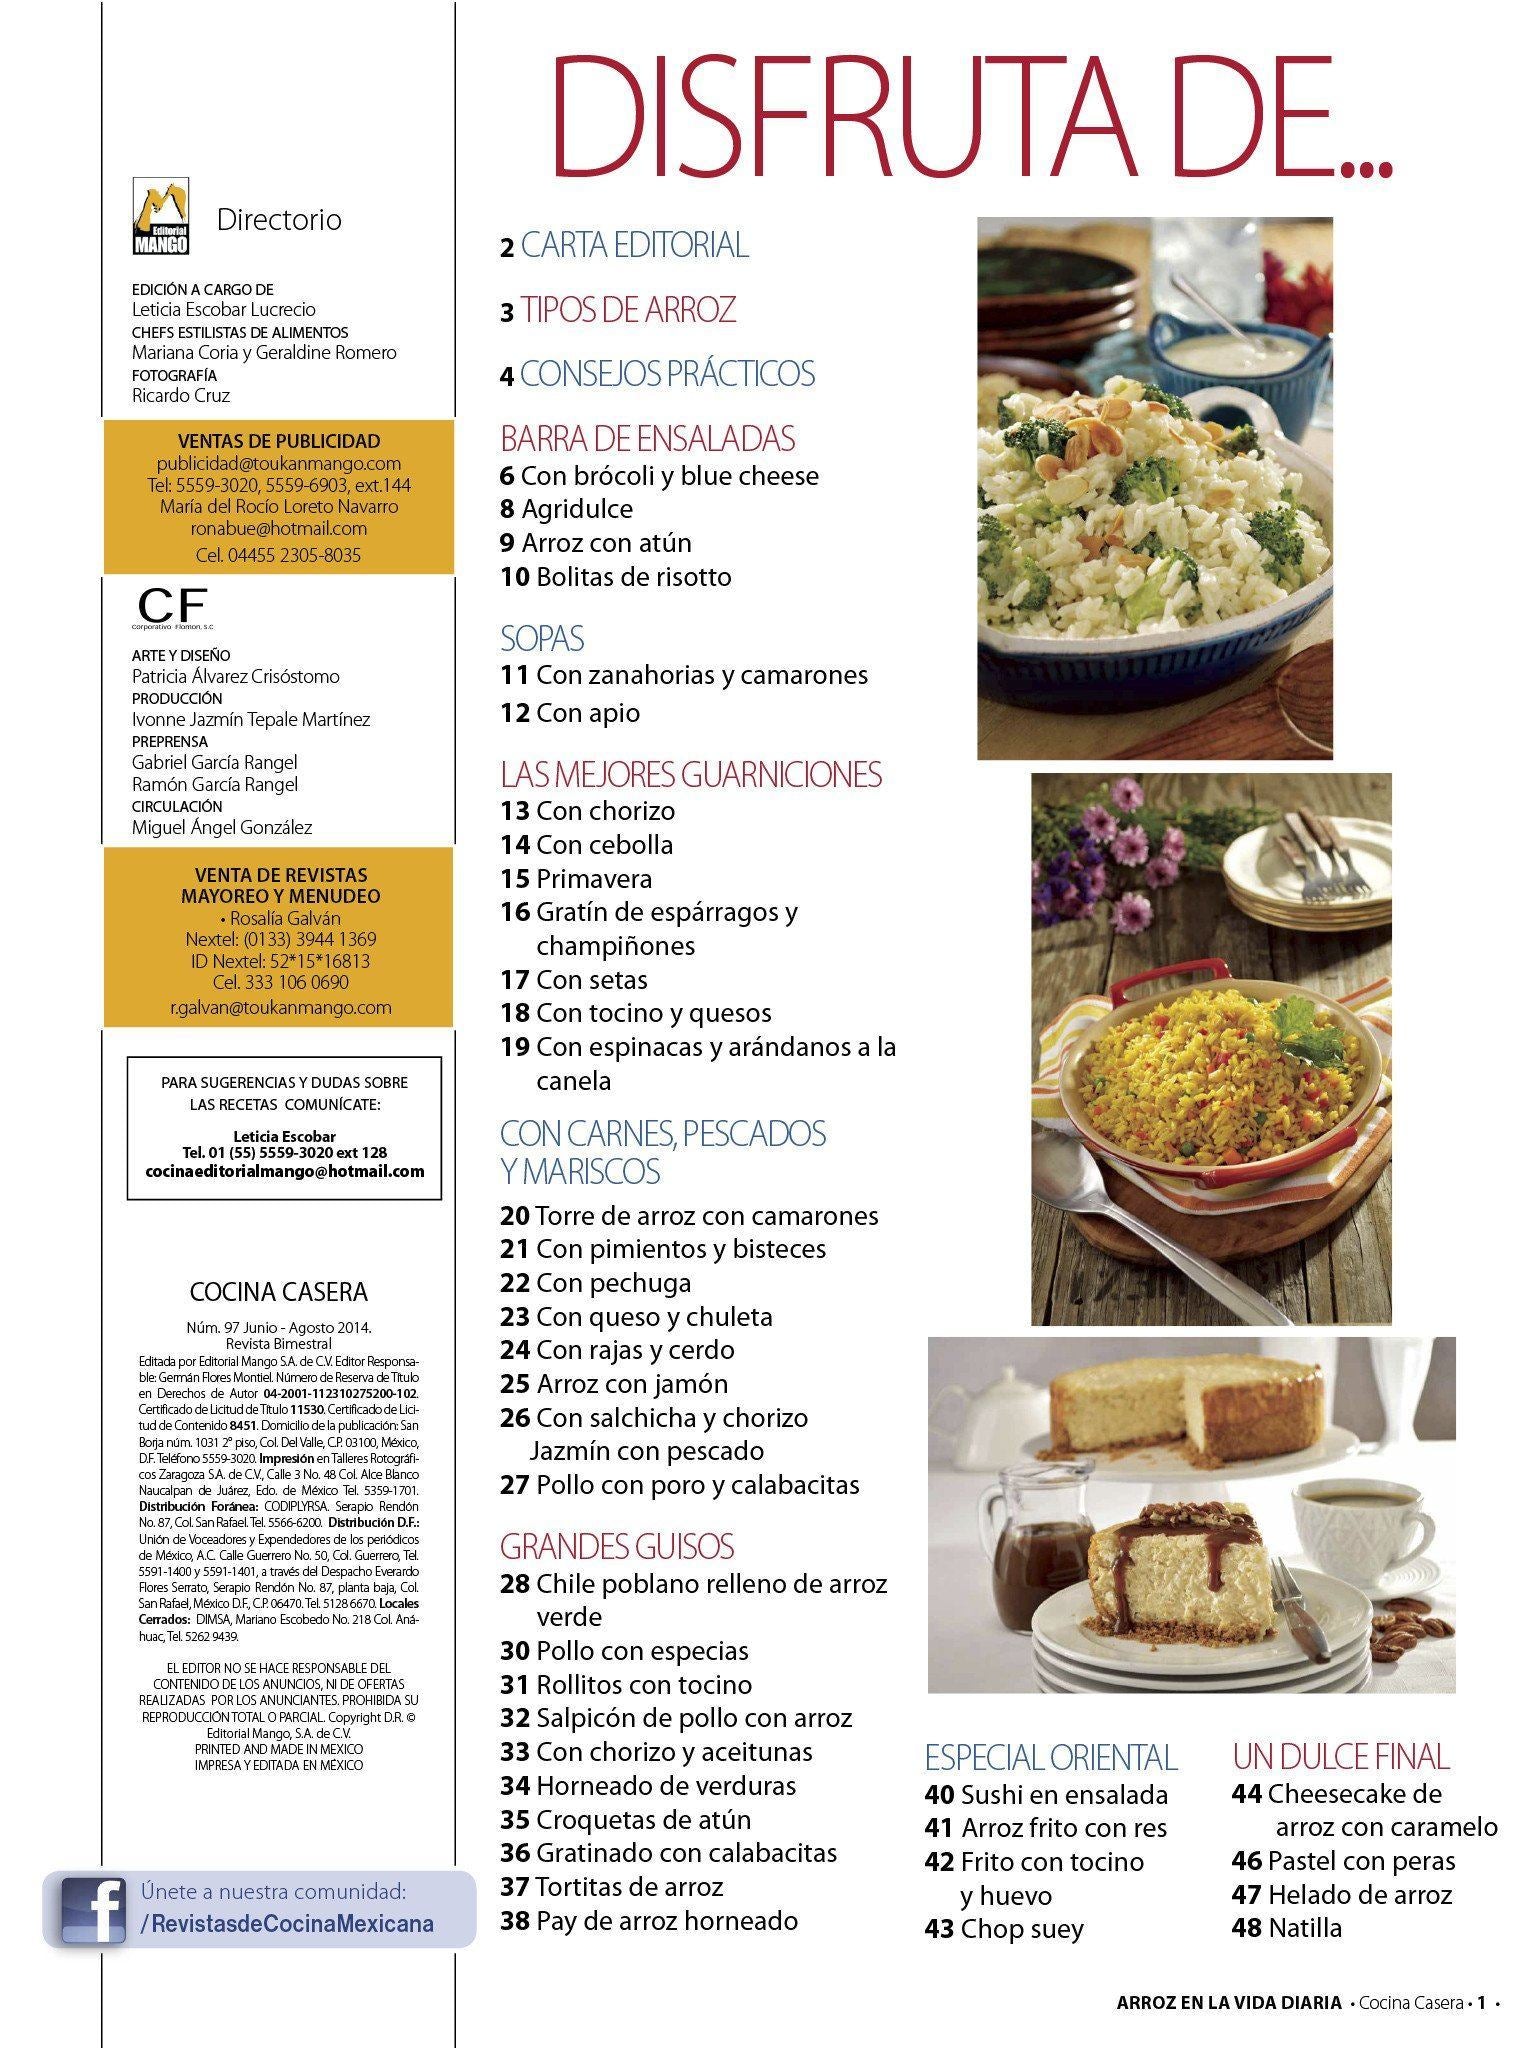 Cocina Casera 97 - Arroz en la vida diaria - Formato Digital - ToukanMango